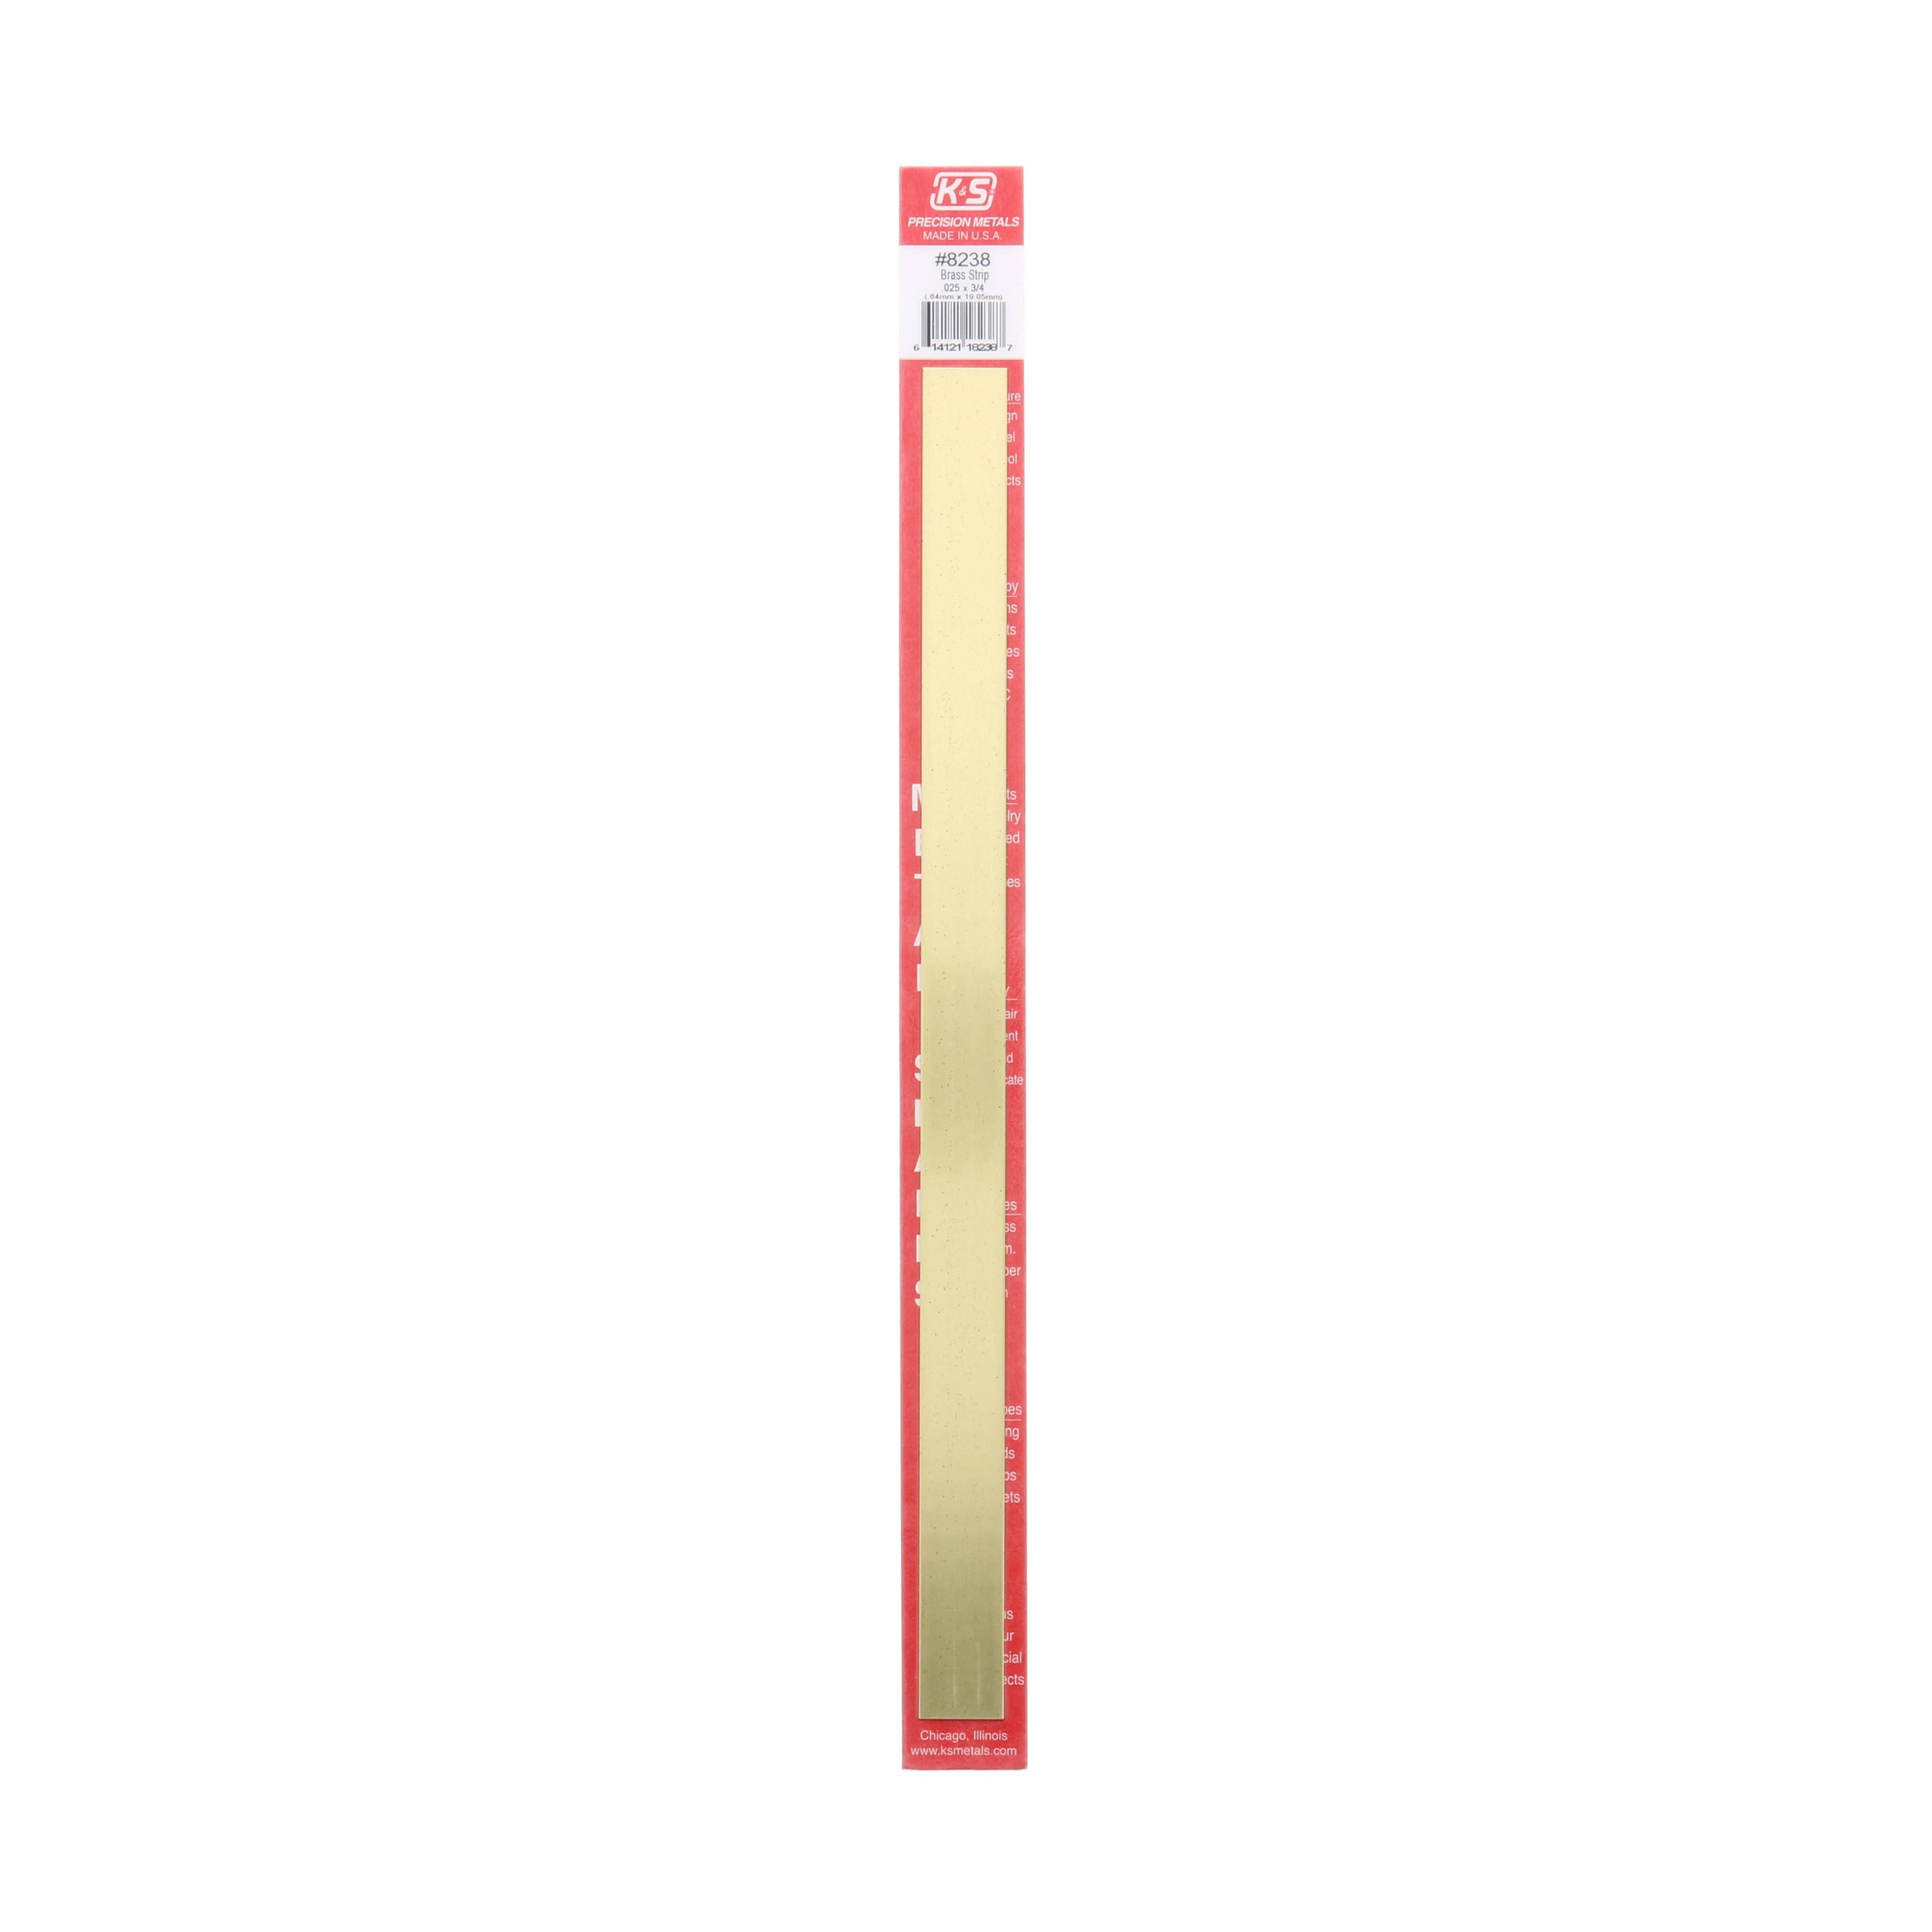 K&S [8238] 12in Brass Strip 3/4x.025